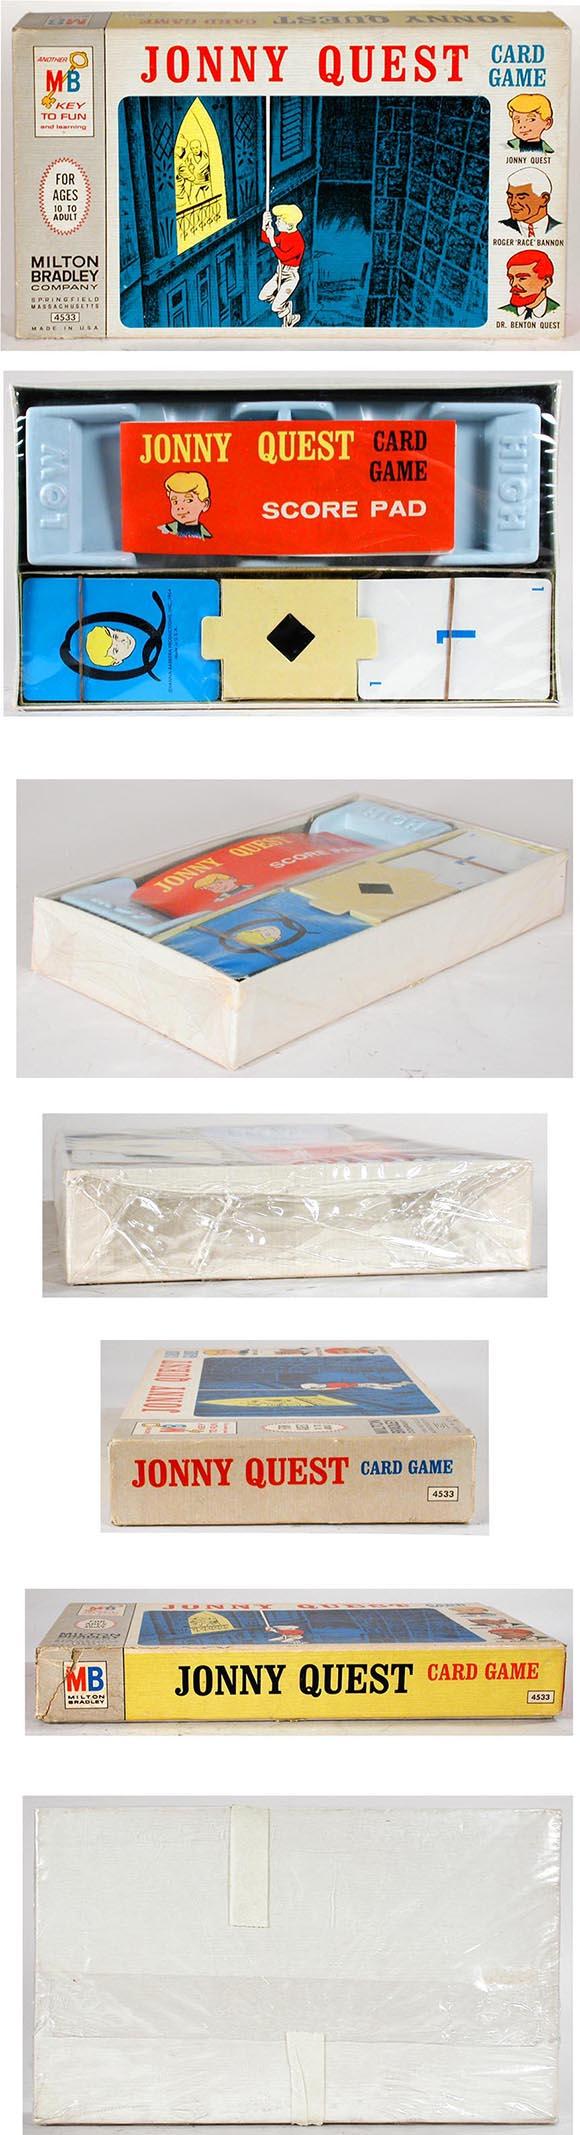 1965 Milton Bradley, Jonny Quest Card Game, Sealed in Original Box